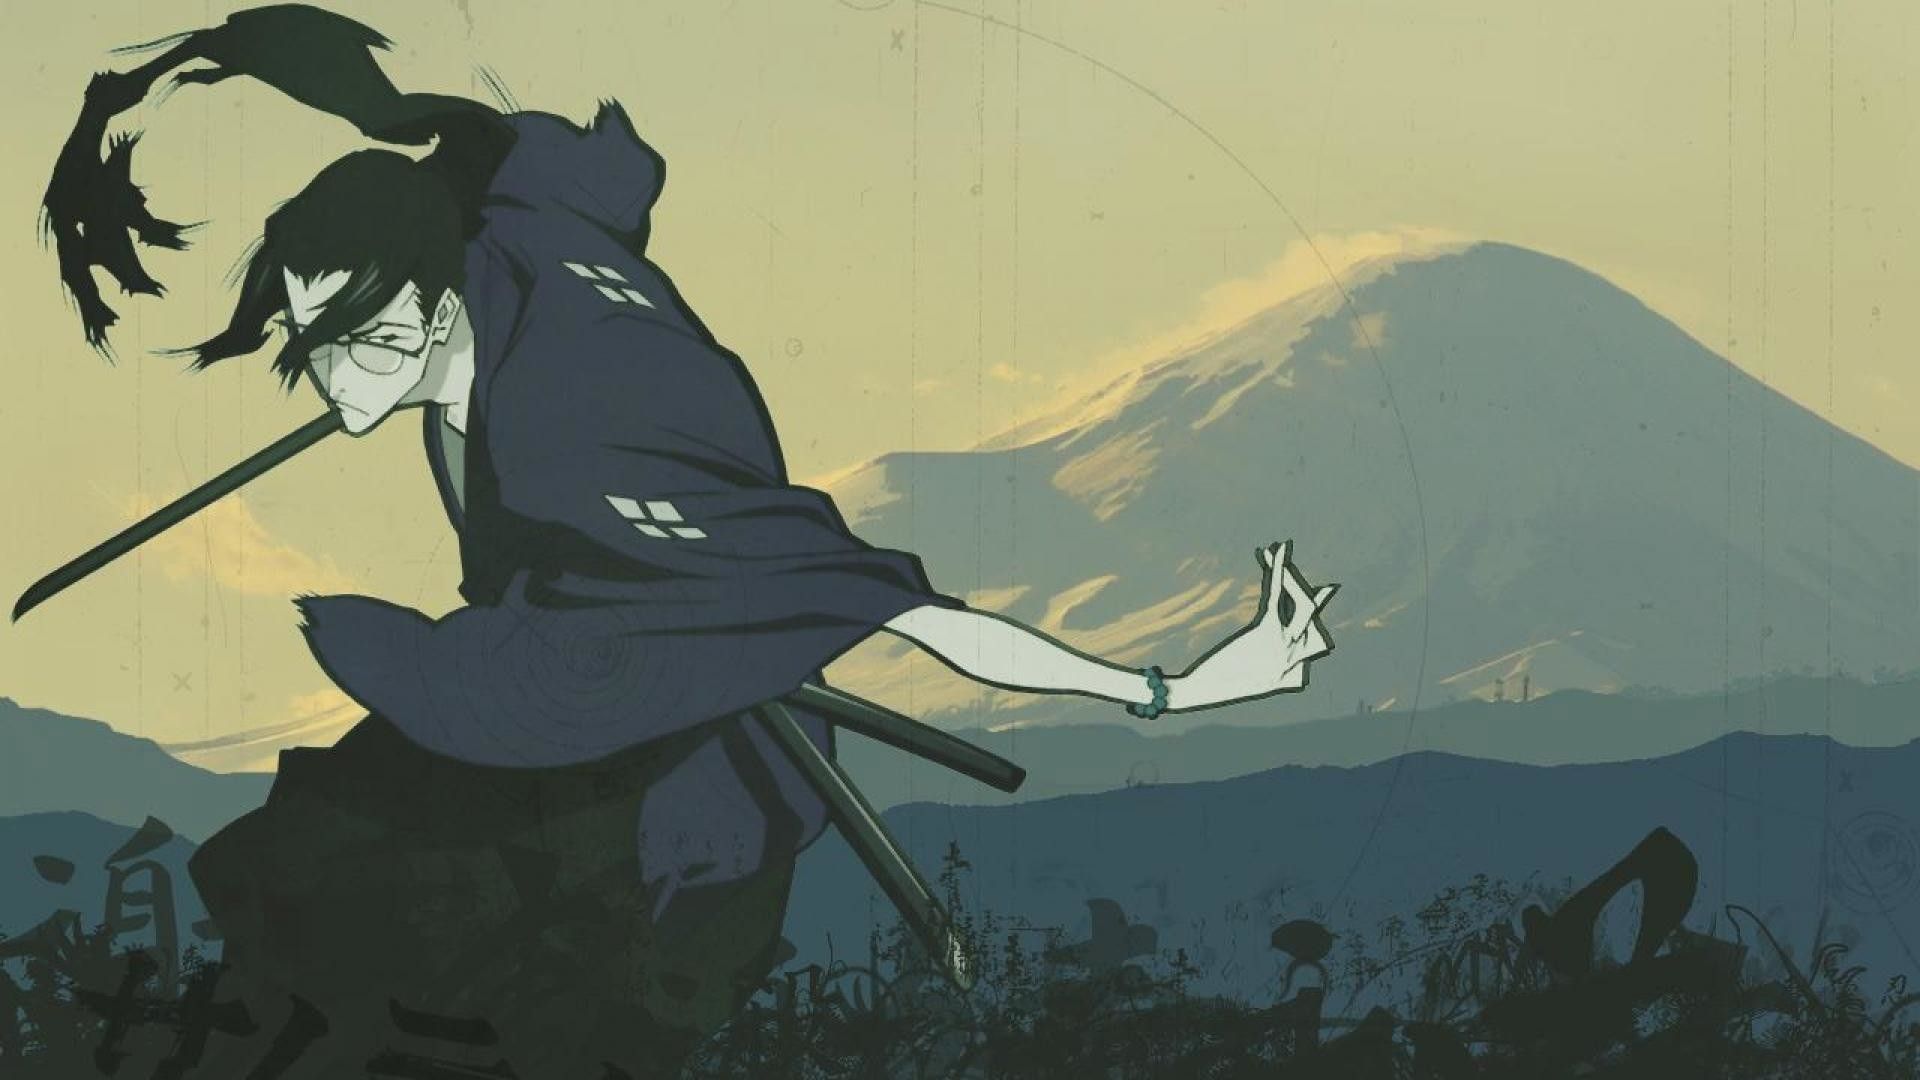 A man with swords and an umbrella in the mountains - Samurai